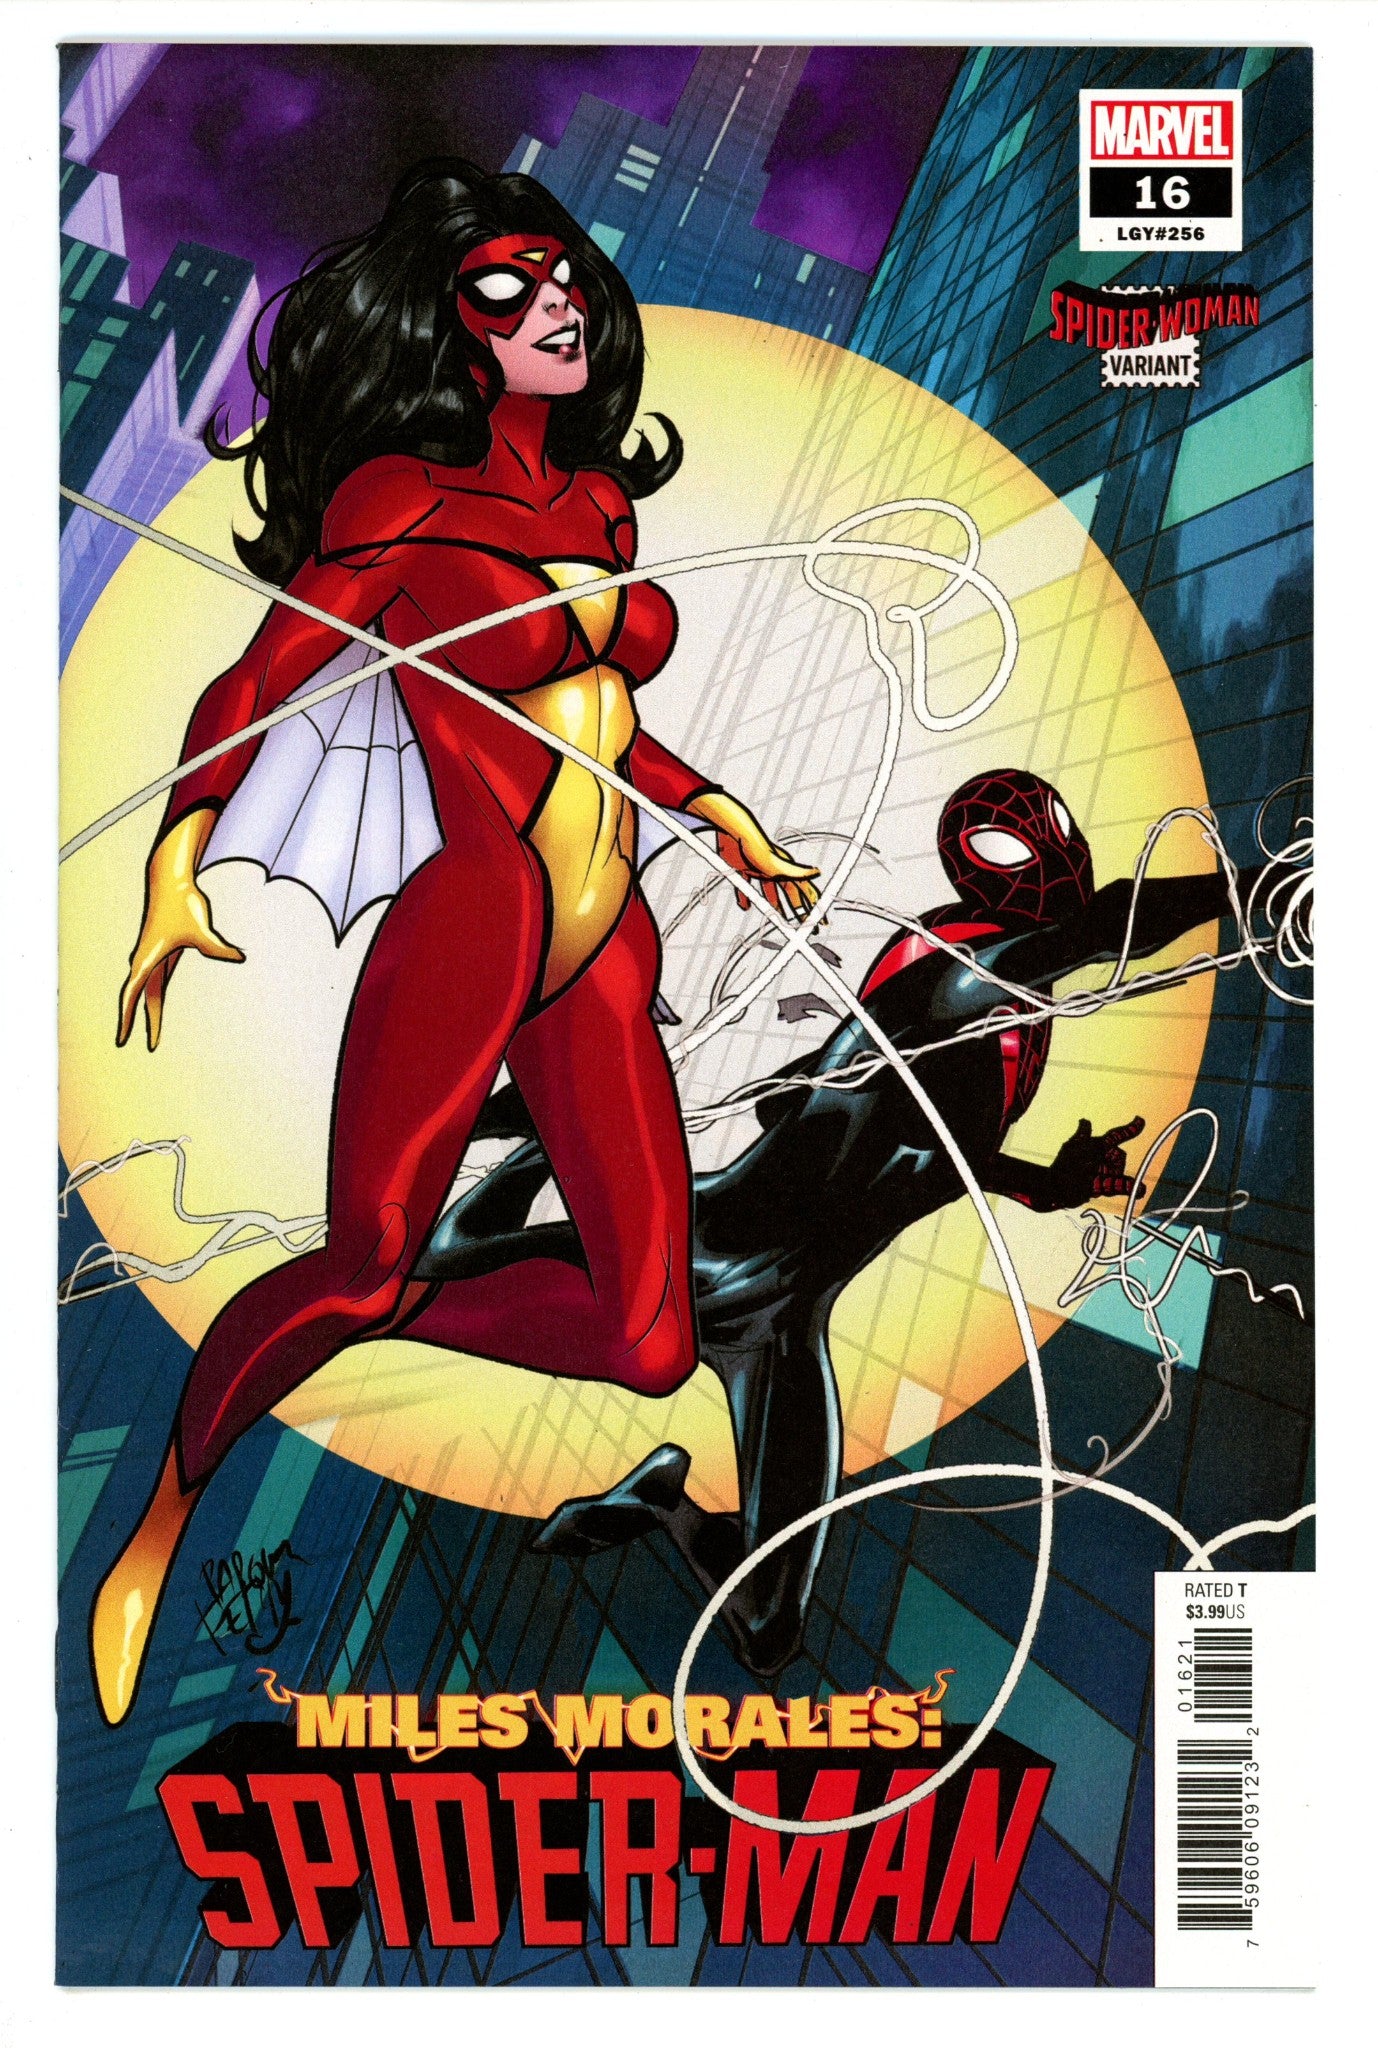 Miles Morales: Spider-Man Vol 1 16 (256)High Grade(2020) FerryVariant